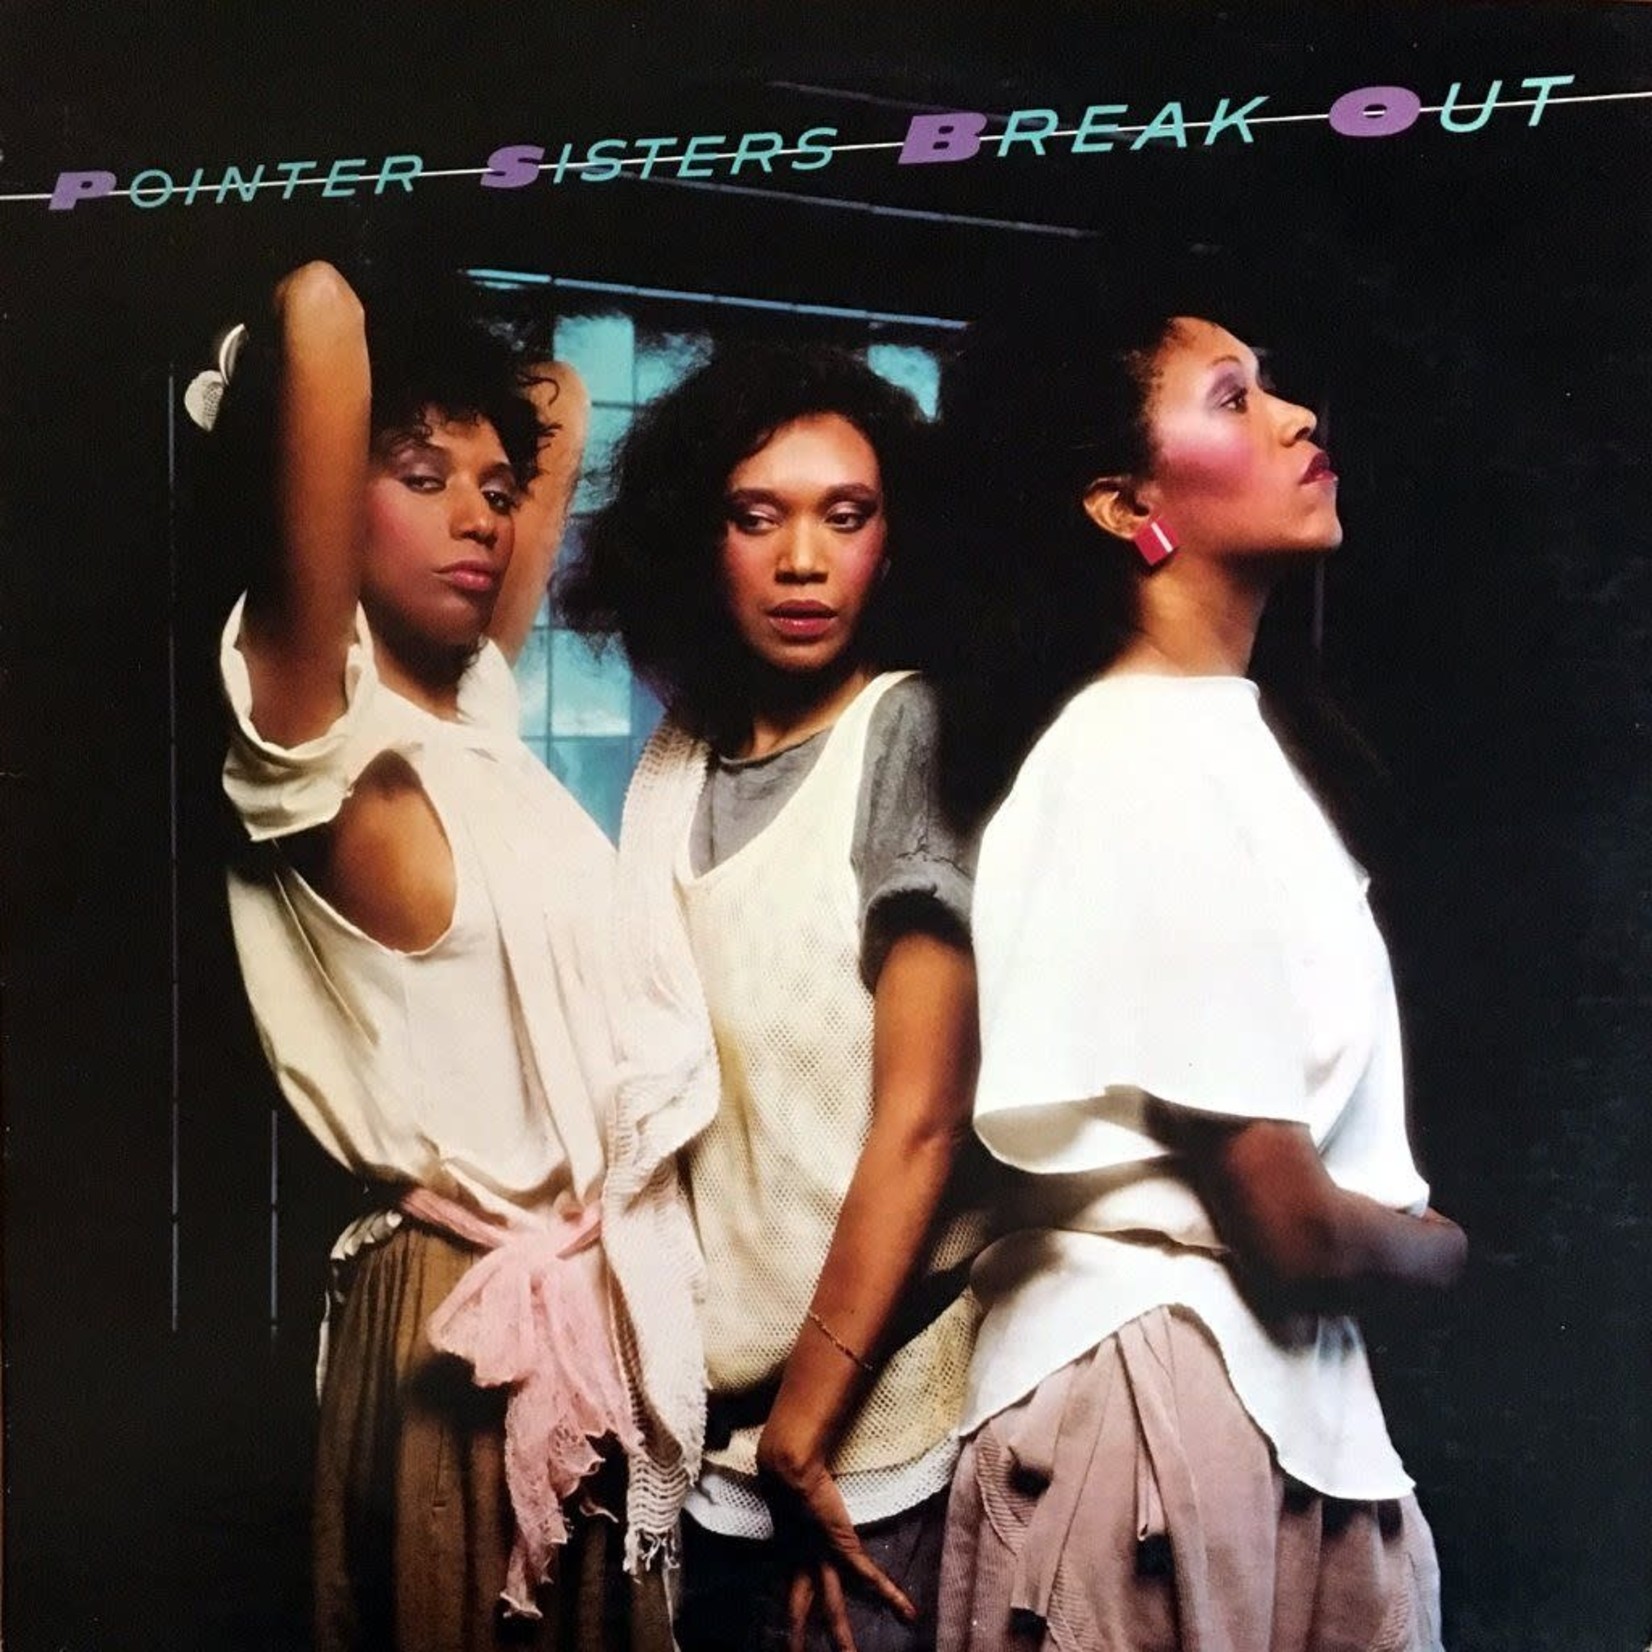 [Vintage] Pointer Sisters - Break Out